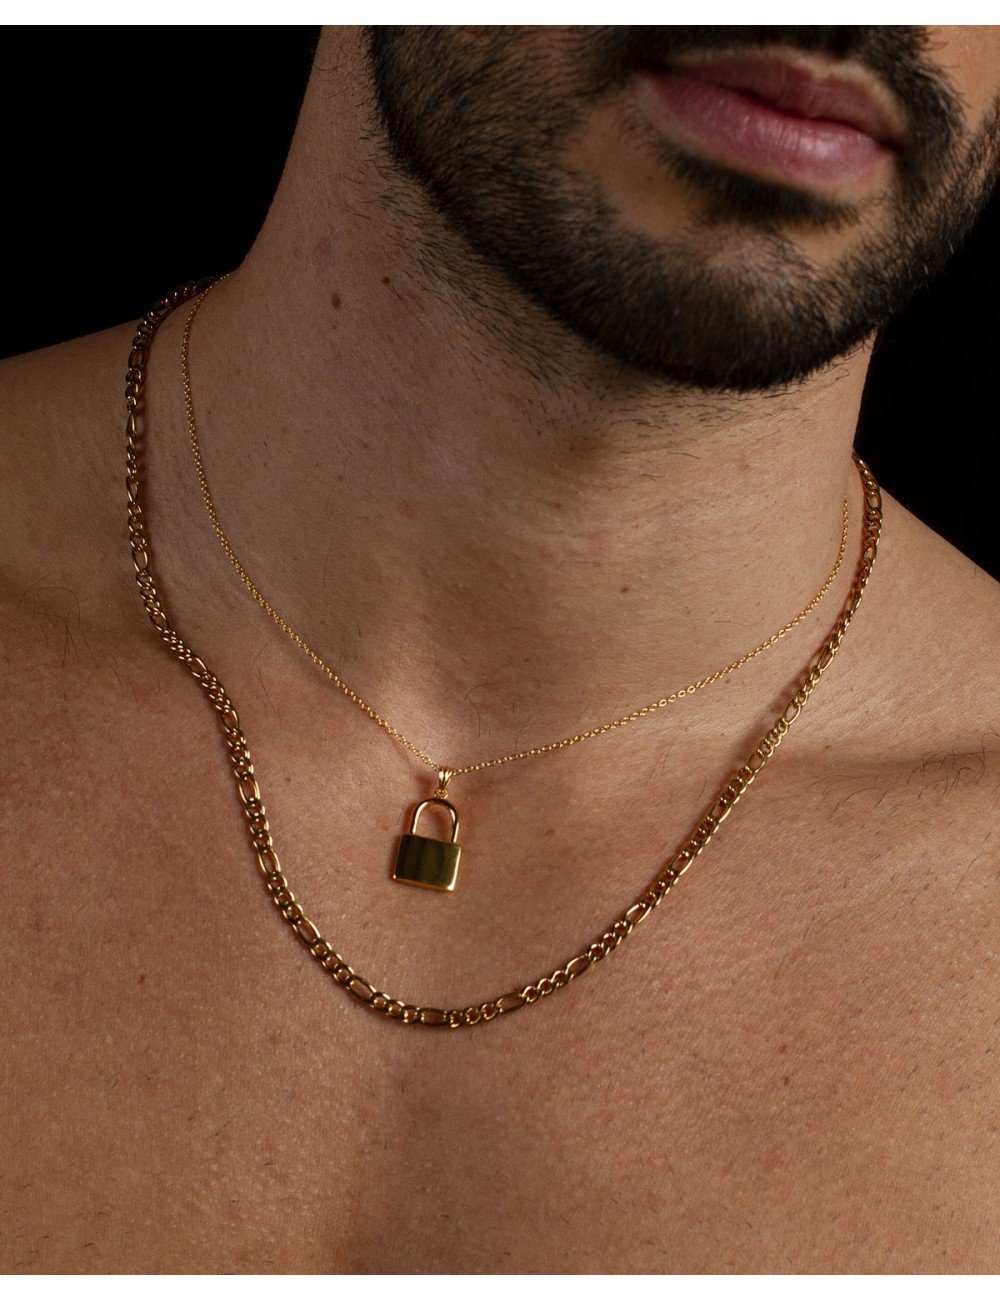 Men's gold MINI Padlock Necklace Mens Gold 